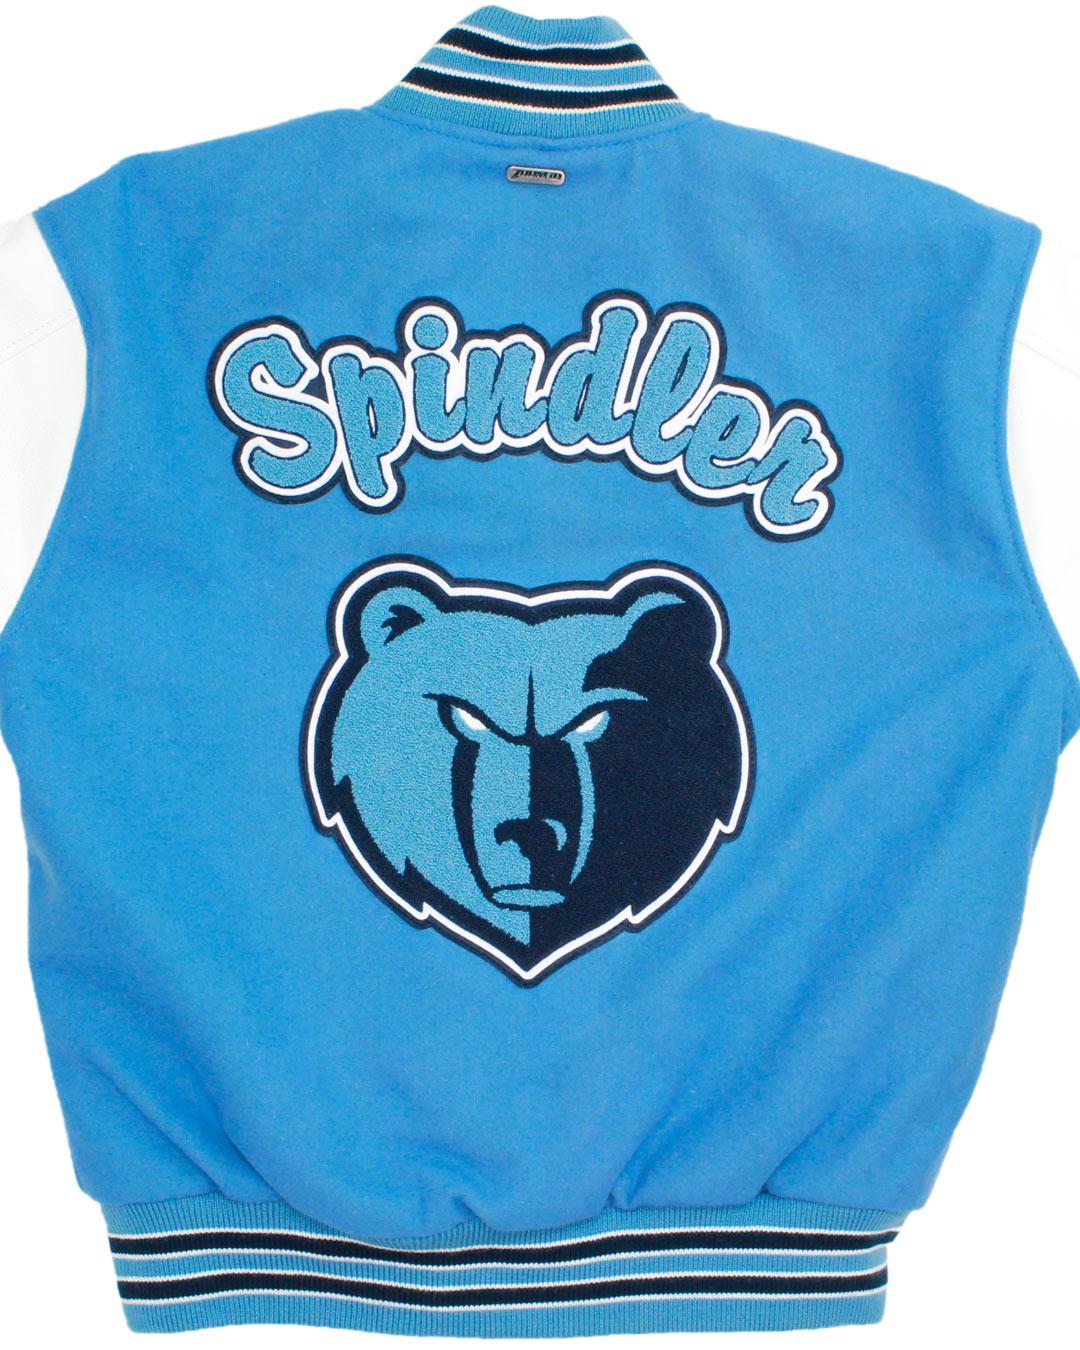 Central Valley High School Bears Letter Jacket, Spokane Valley WA - Back